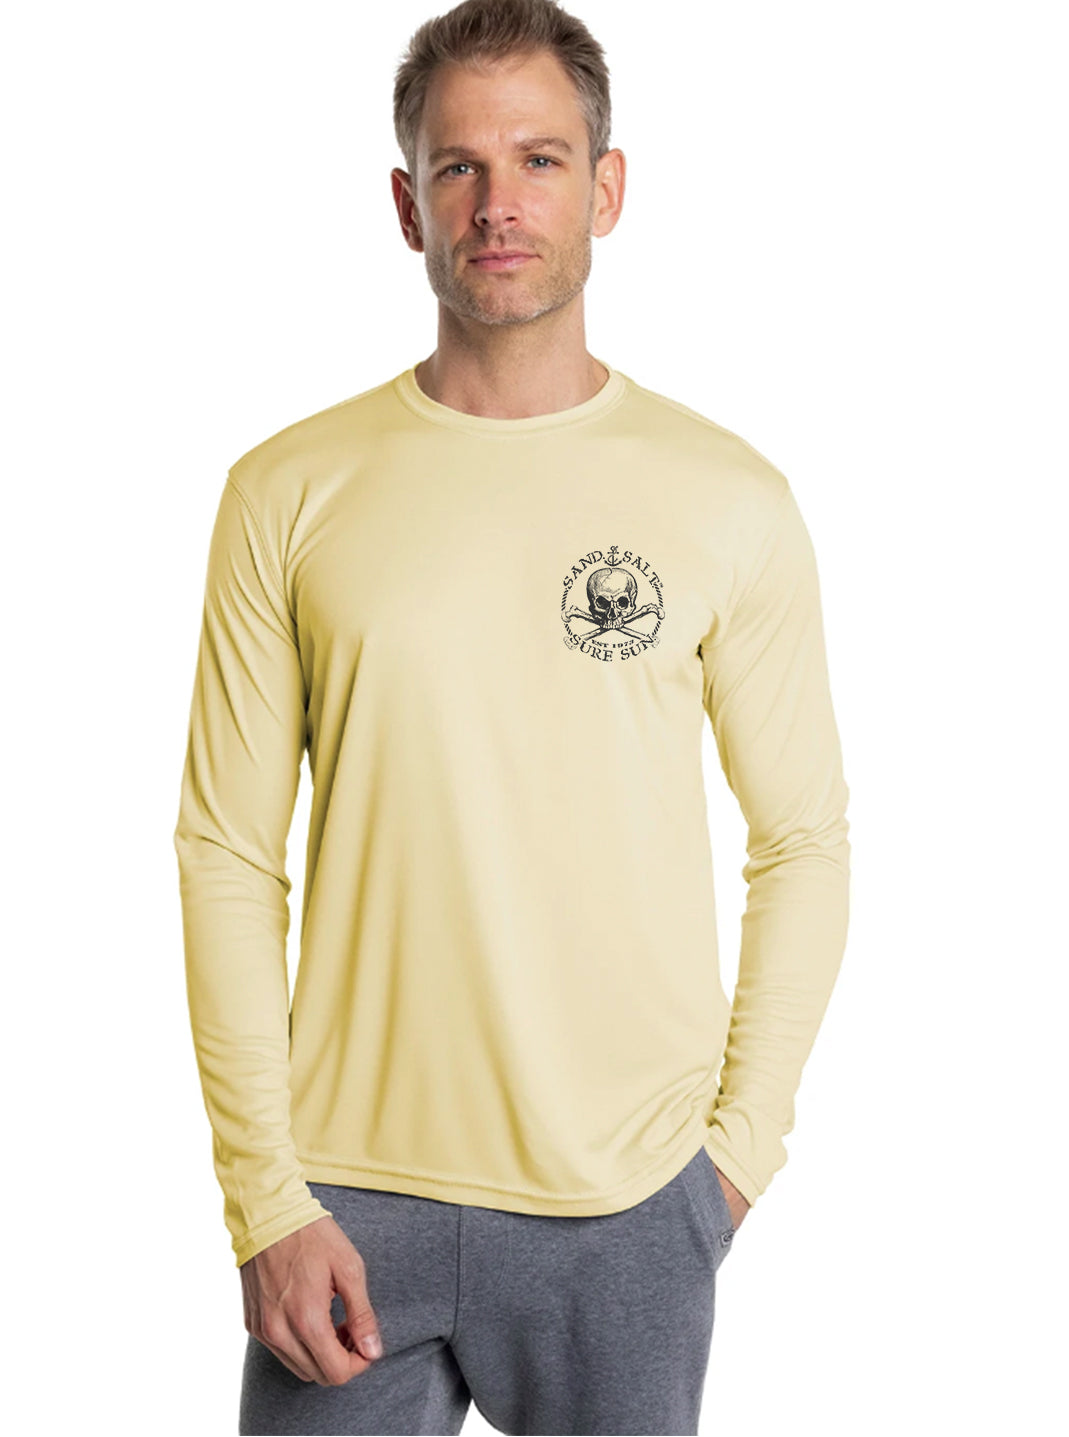 SAND.SALT.SURF.SUN. Marlin Men's UPF 50+ UV Sun Protection Performance Long Sleeve T-Shirt XX-Large / Pearl Grey